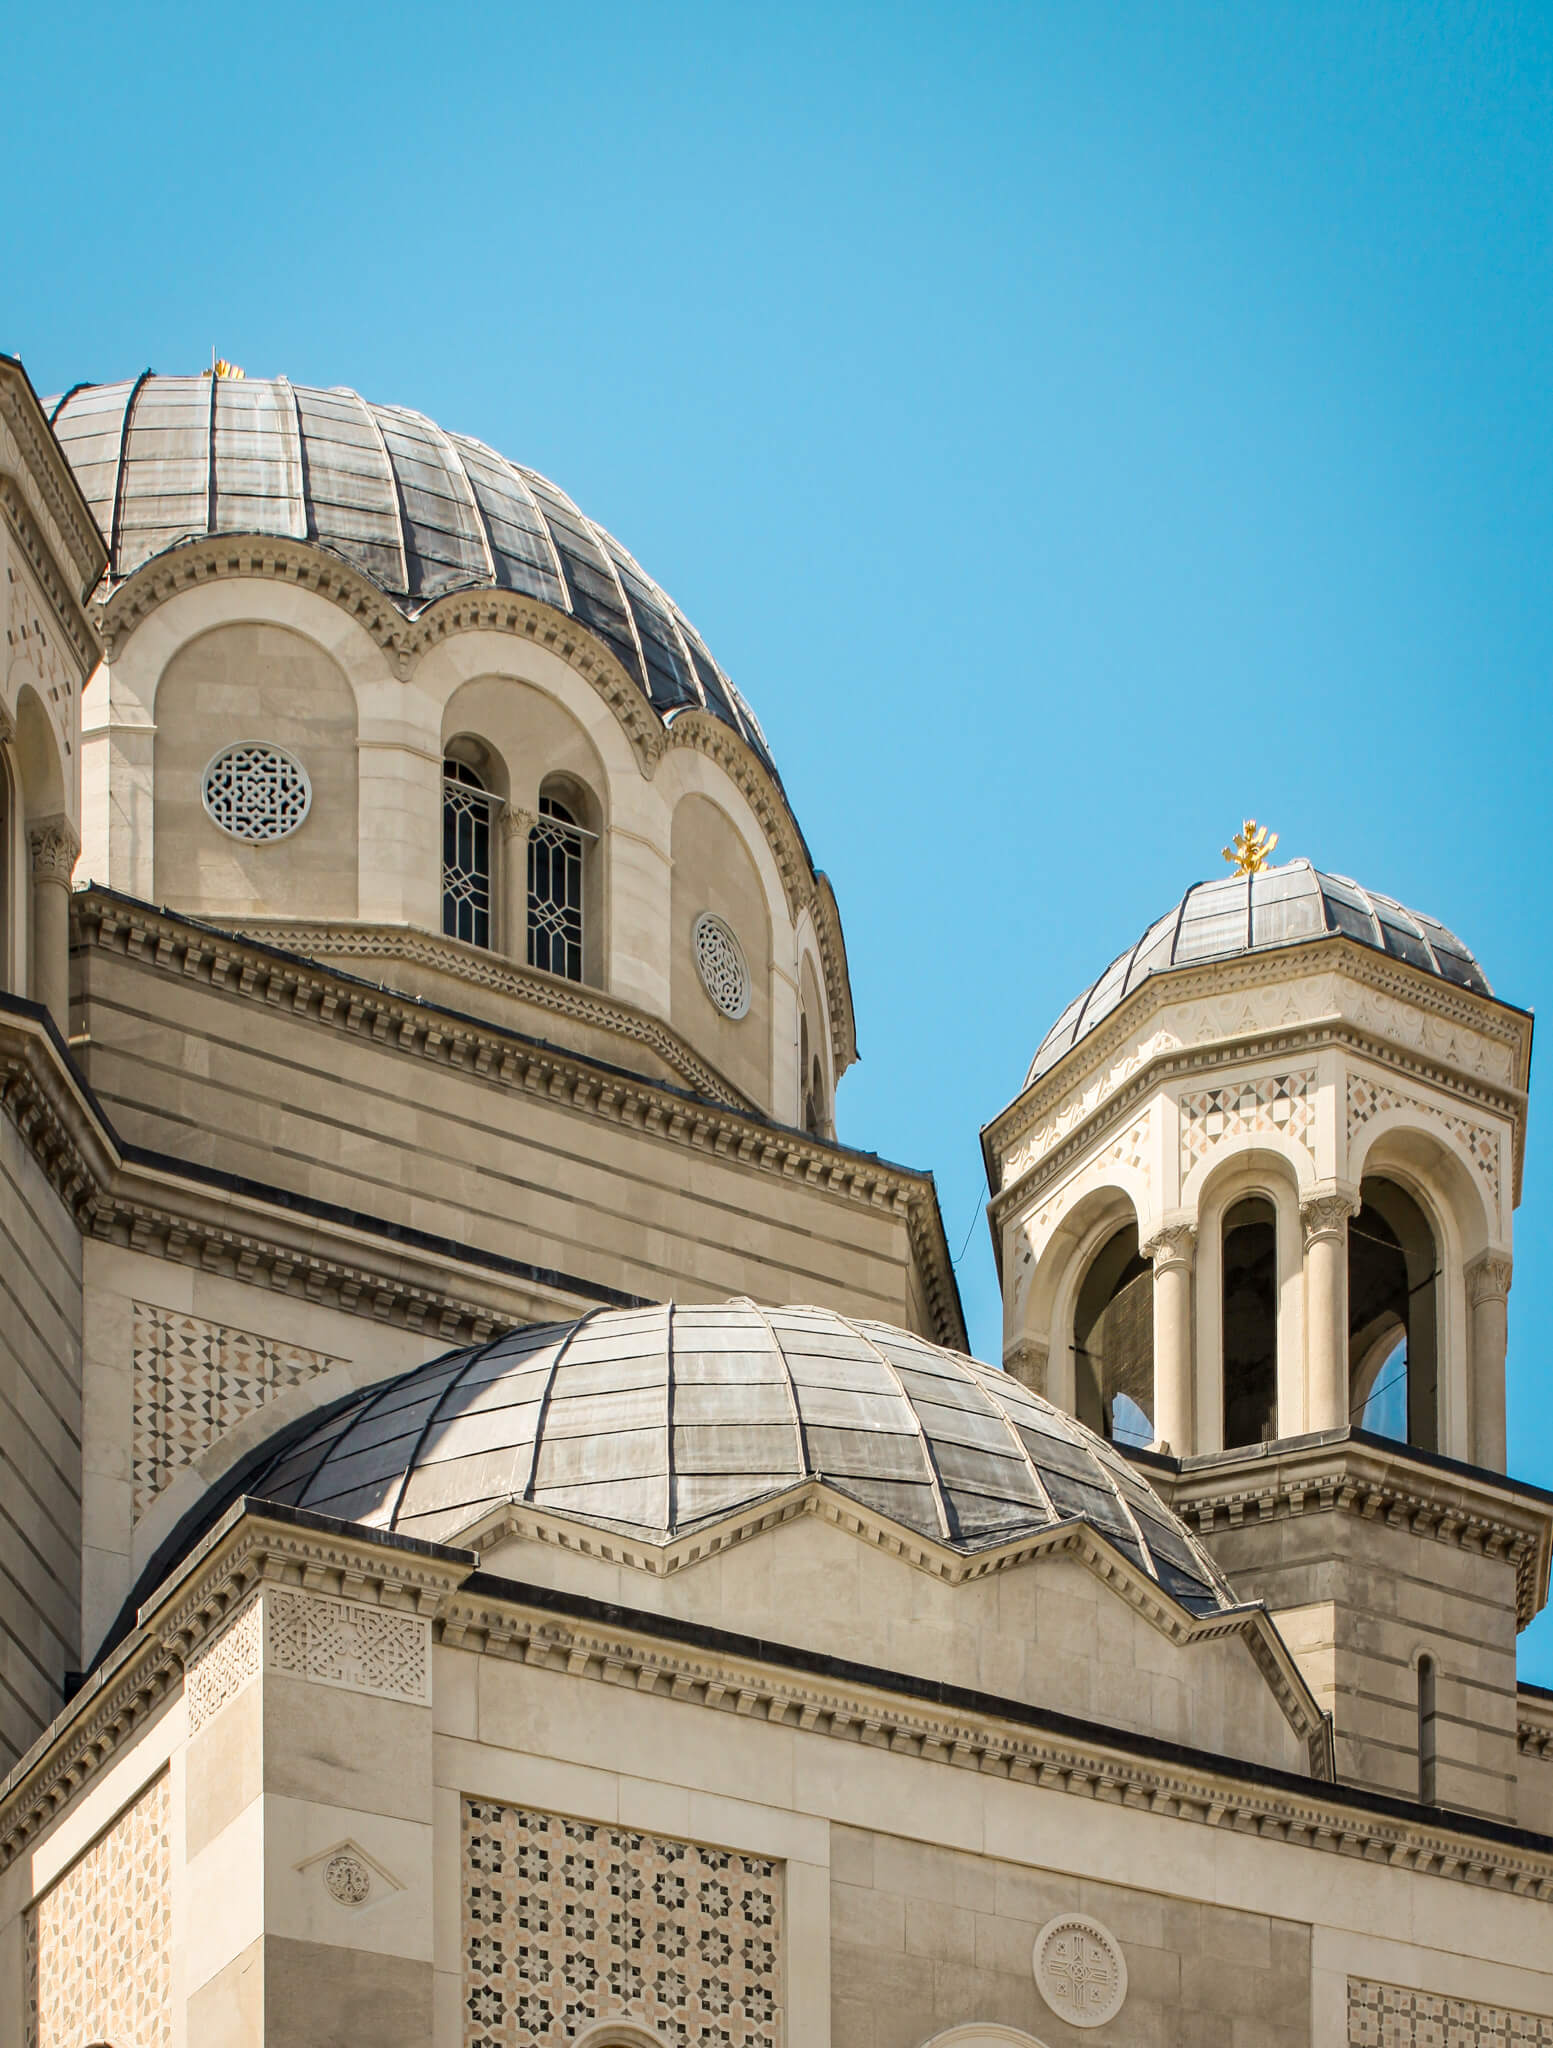 Saint Spyridon Church, a Serbian Orthodox church in Trieste, Italy